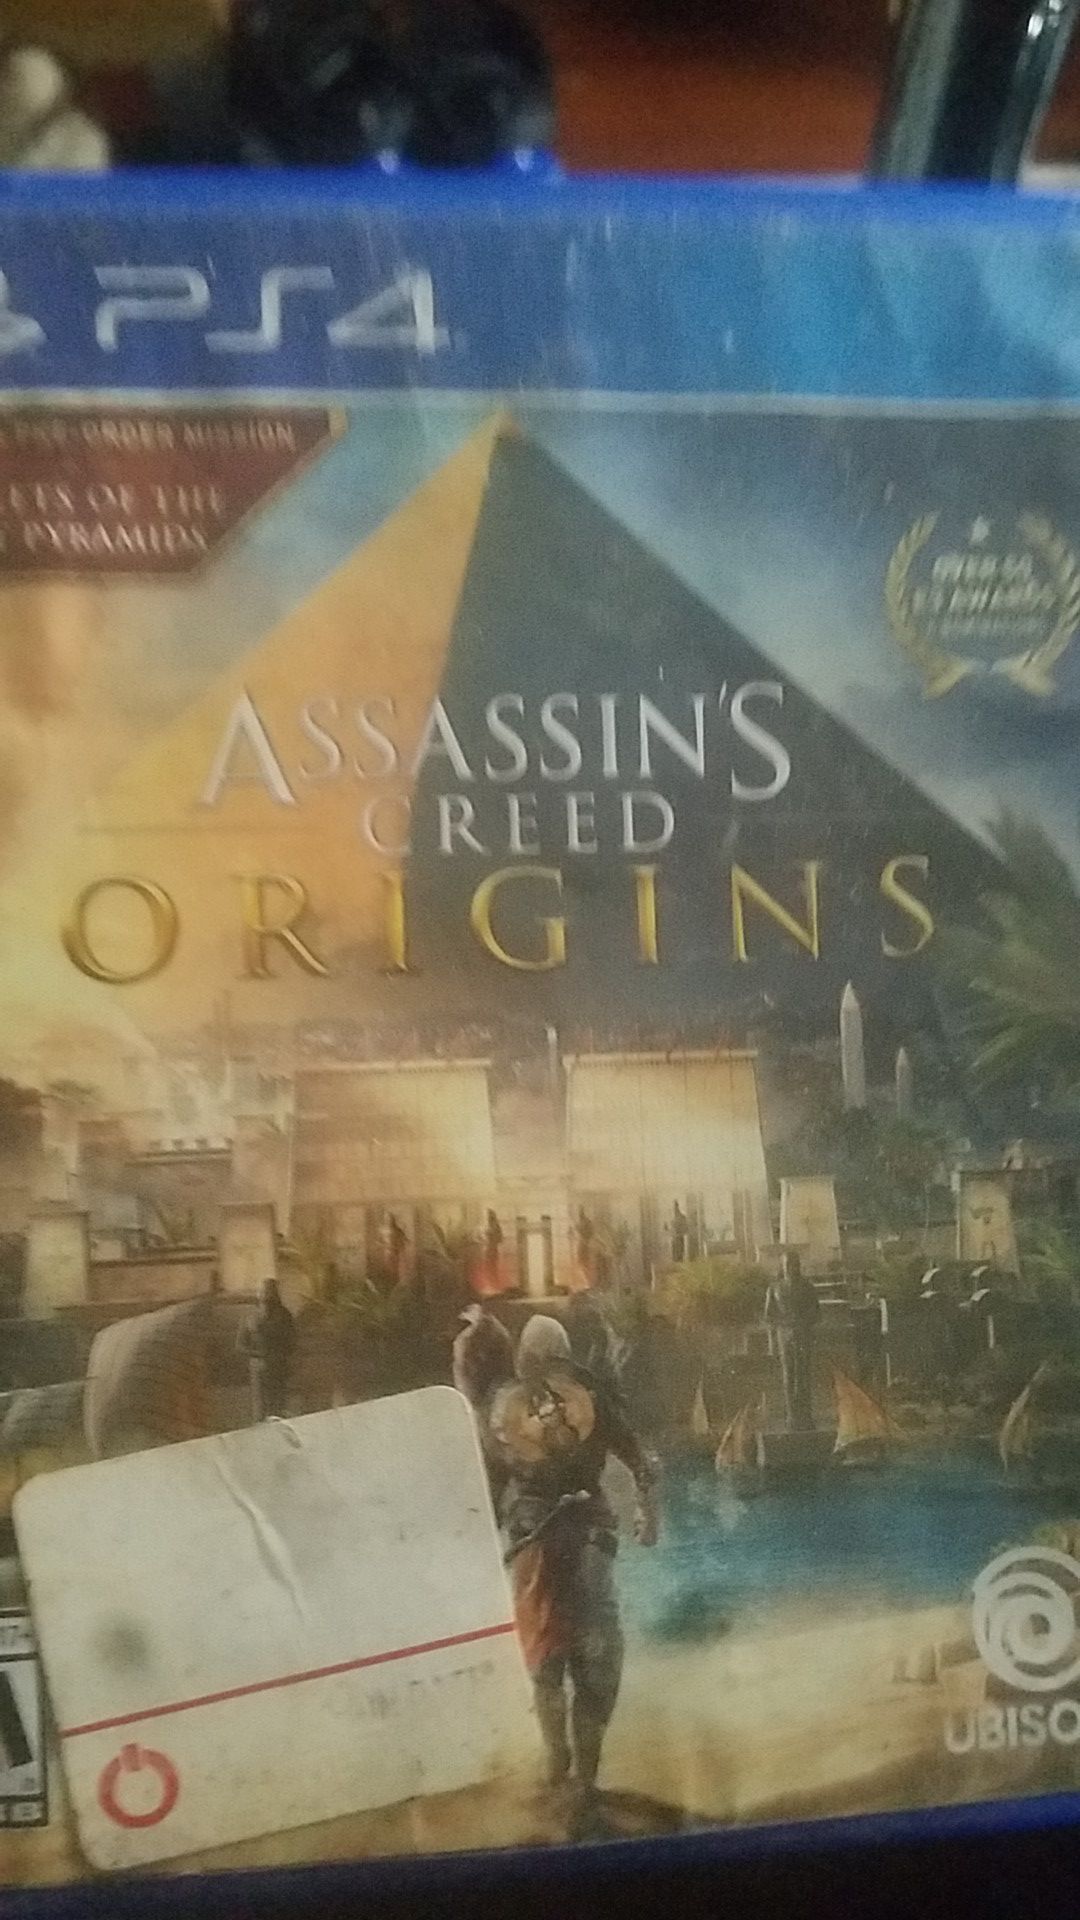 Assassin's creed ORIGINS $15